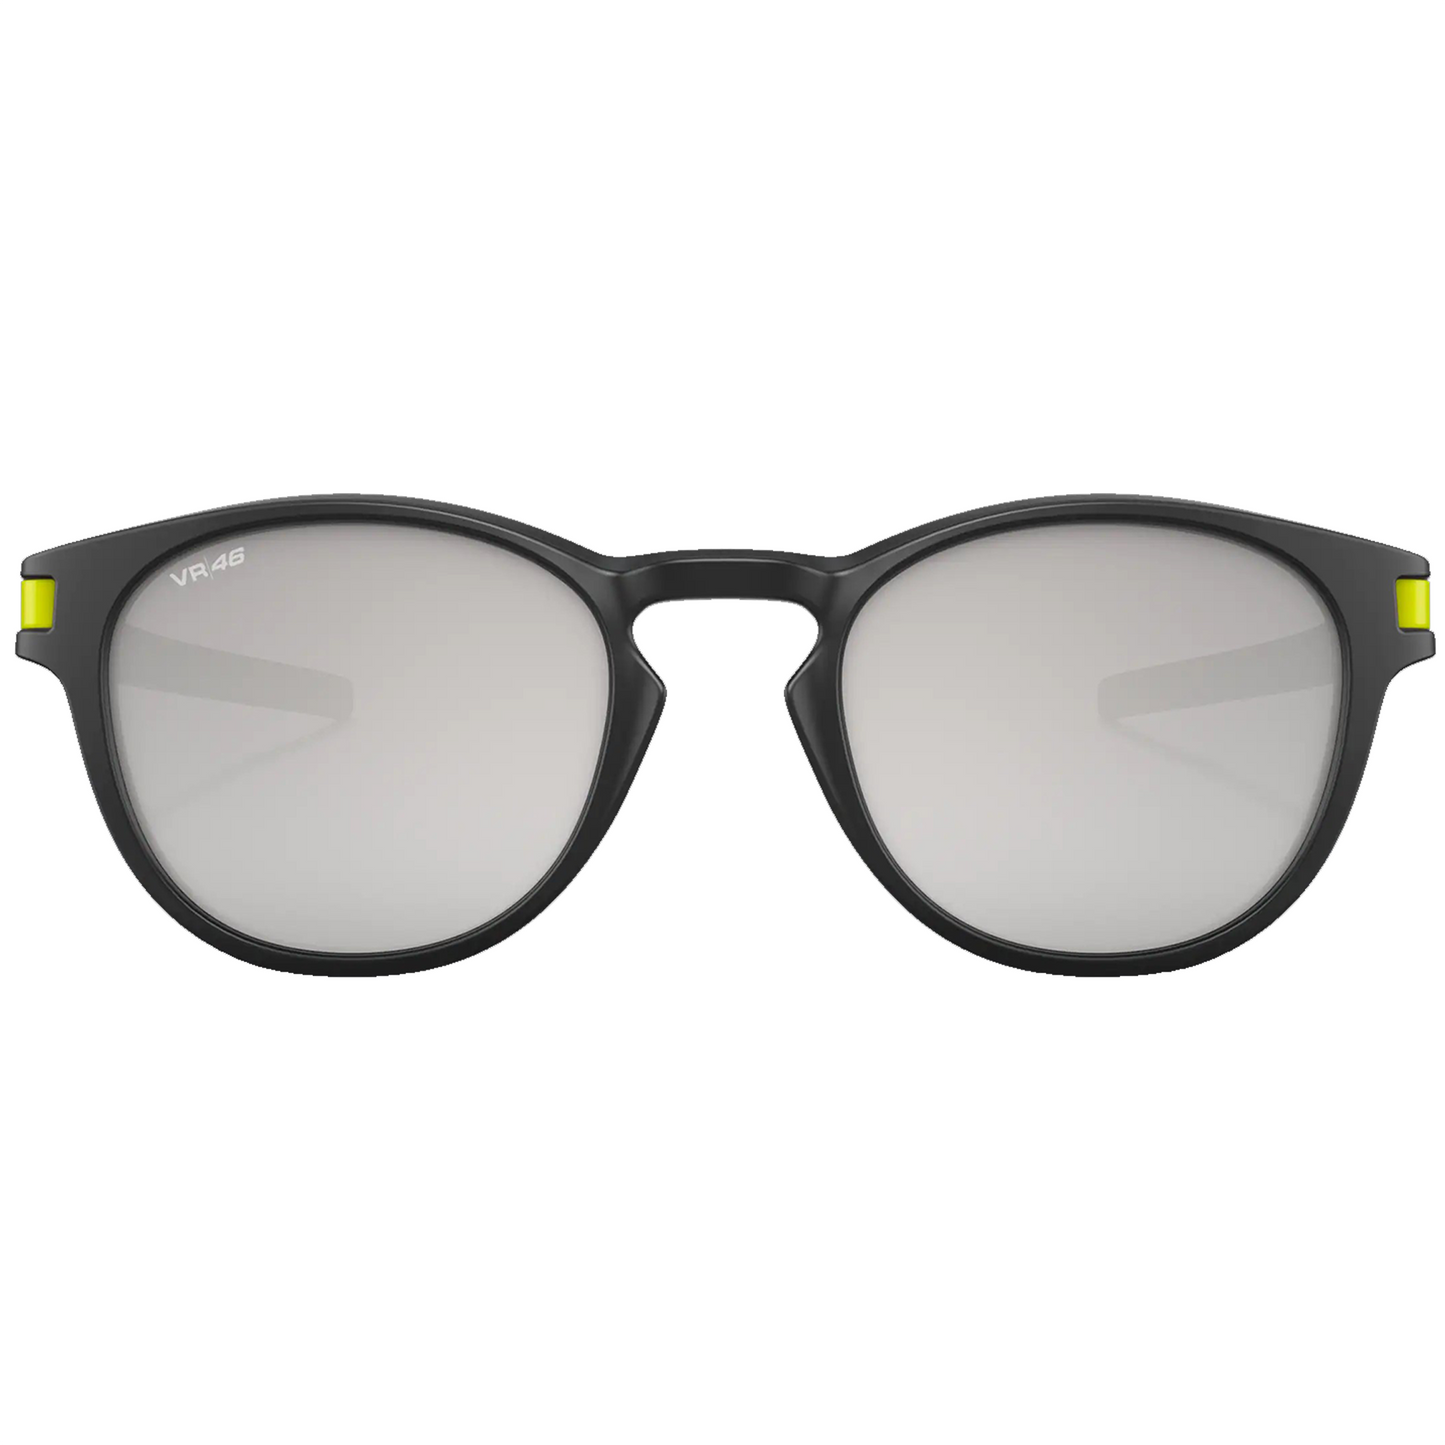 Oakley Latch Sunglasses (VR46 Matte Black) Chrome Iridium Lens